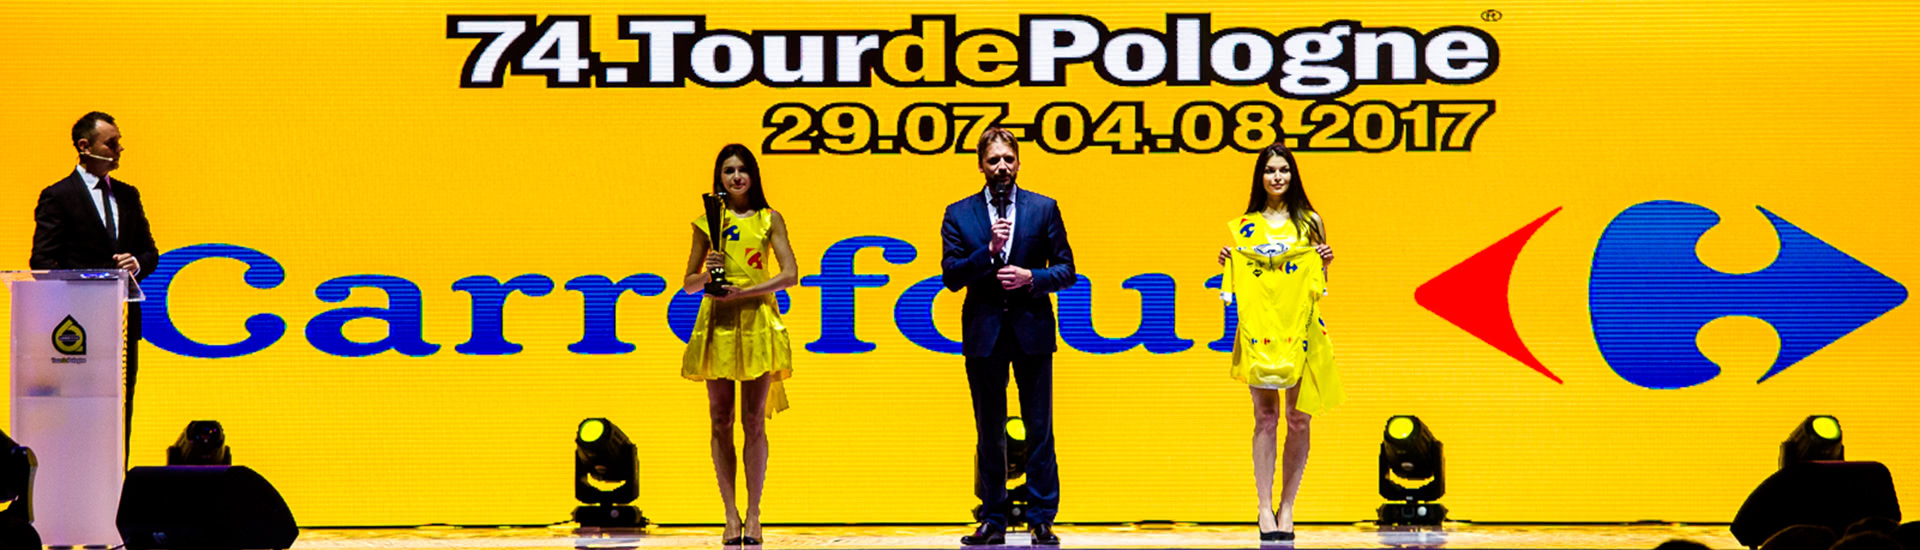 Carrefour Polska sponsorem głównym 74. Tour de Pologne